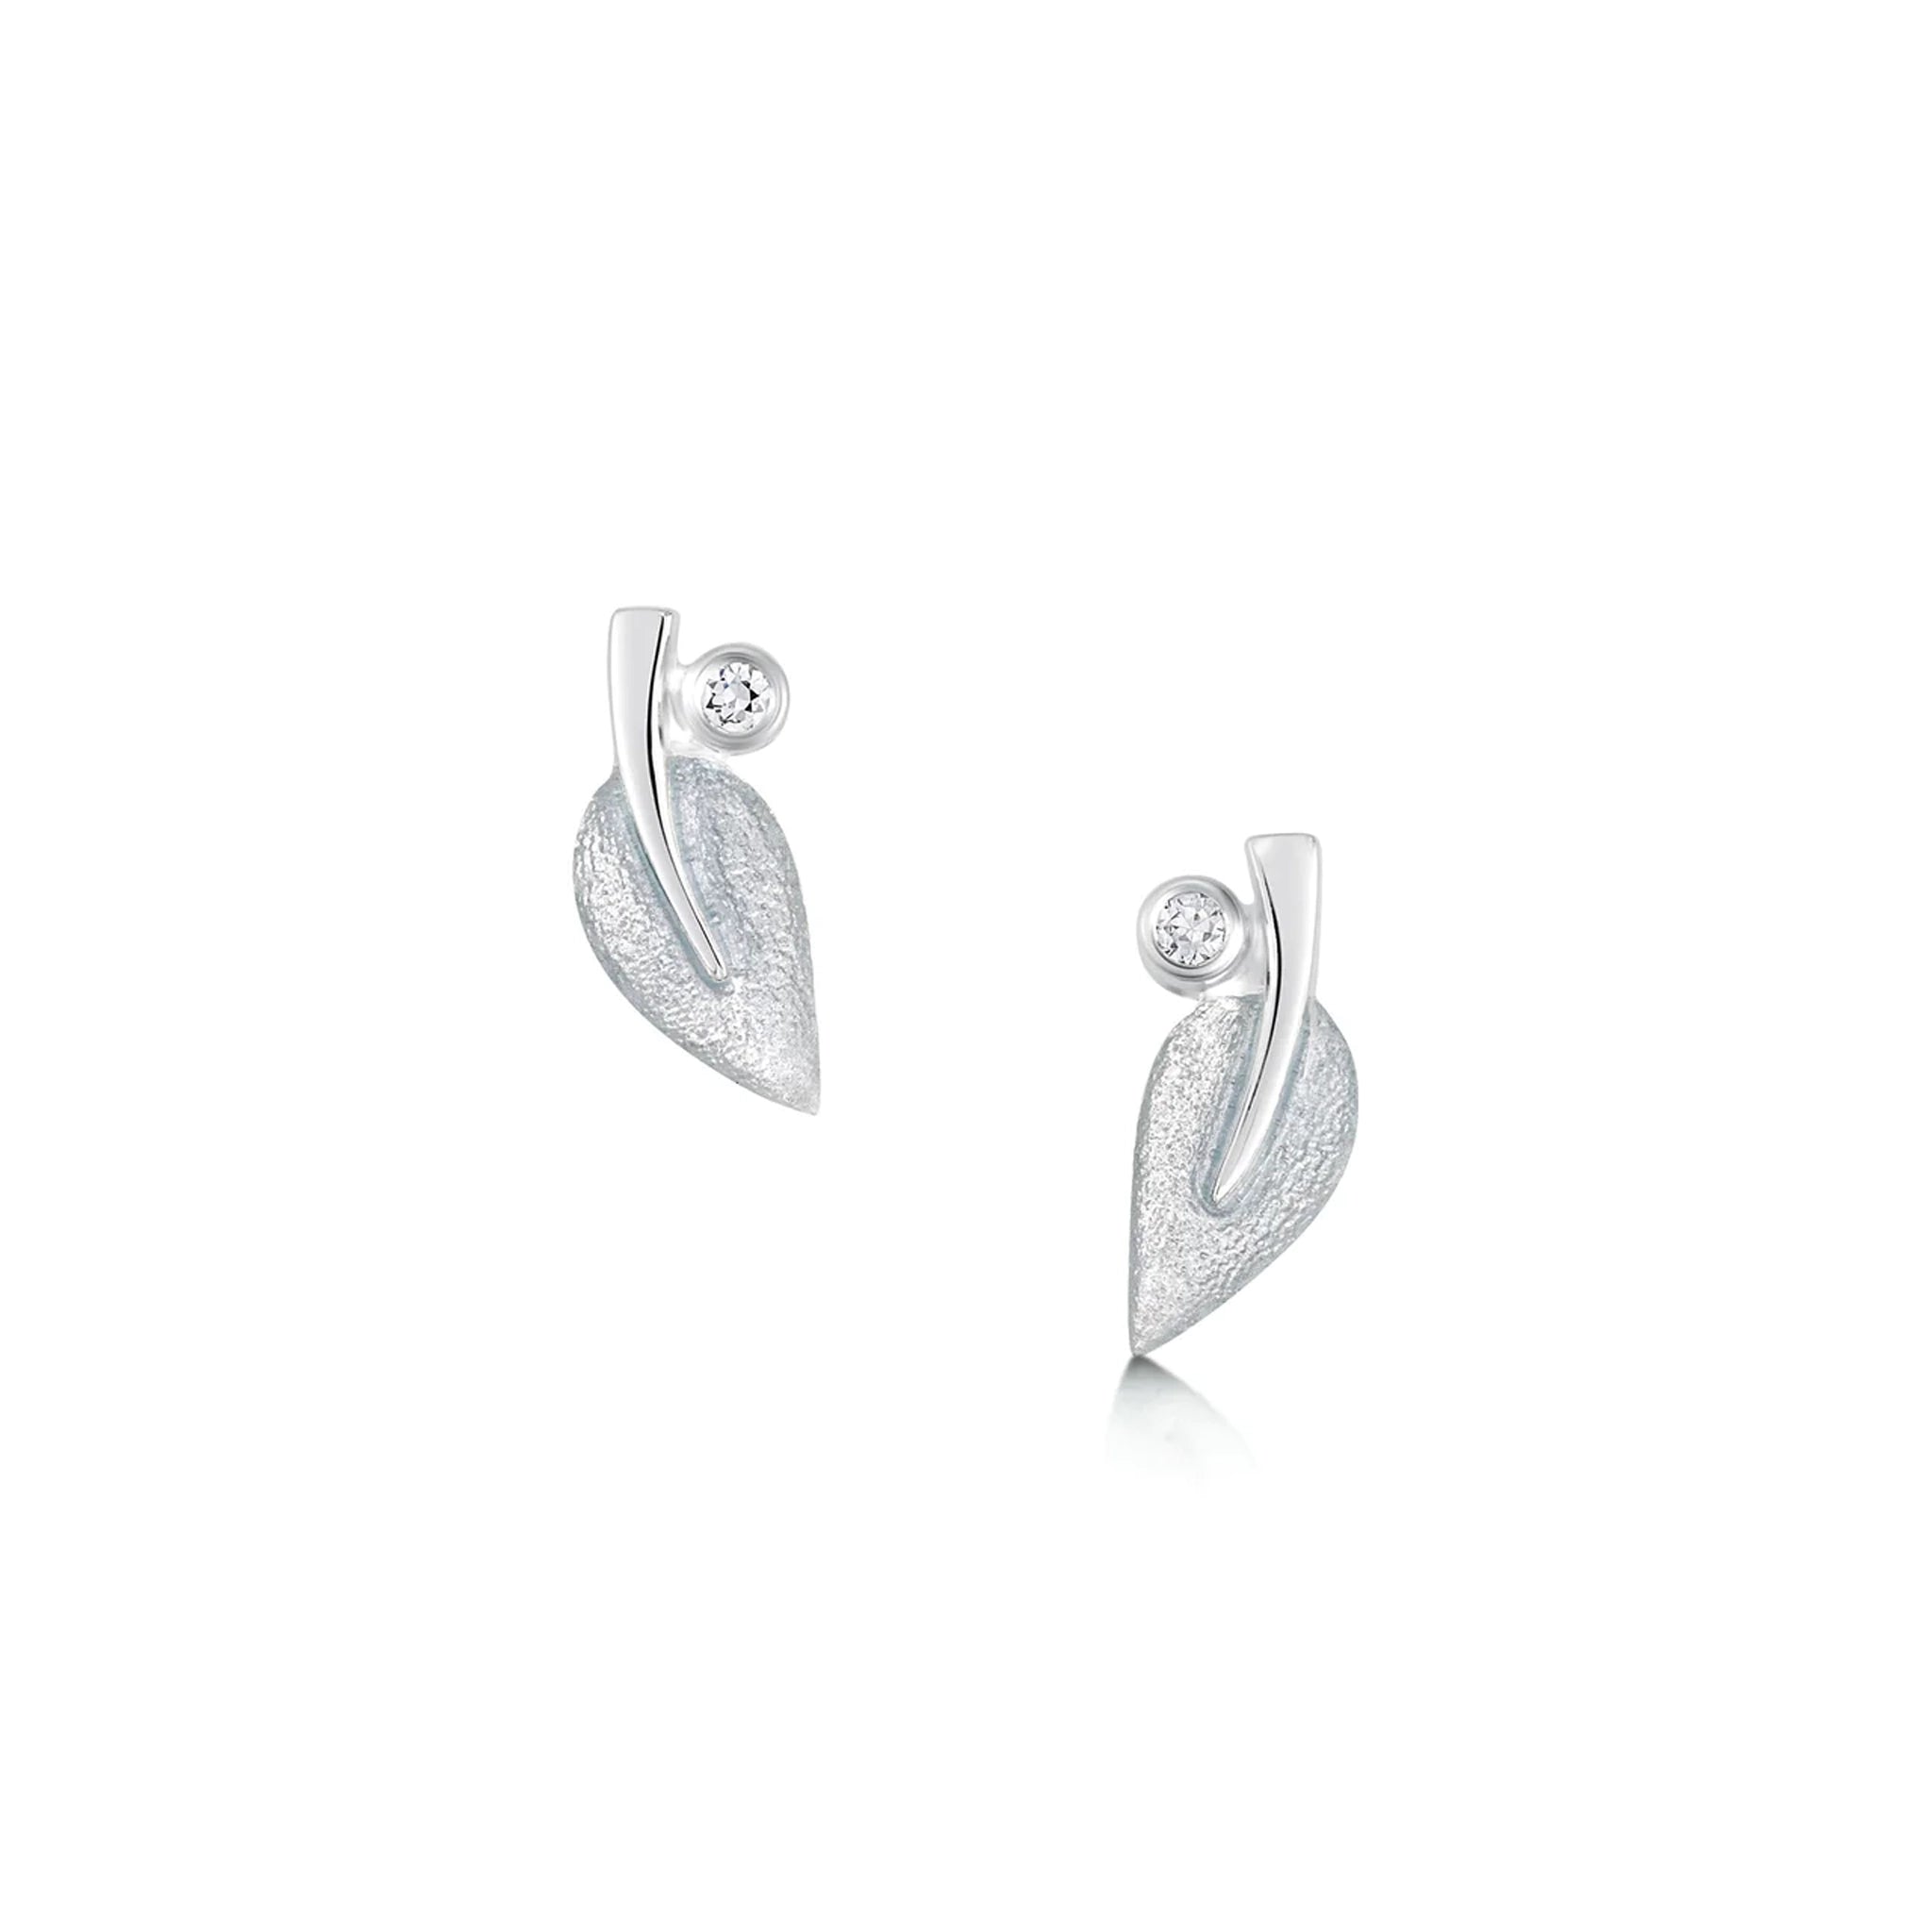 Silver stud earrings in the shape of rowan tree leaves, in frosty white enamel and with a cubic zirconia